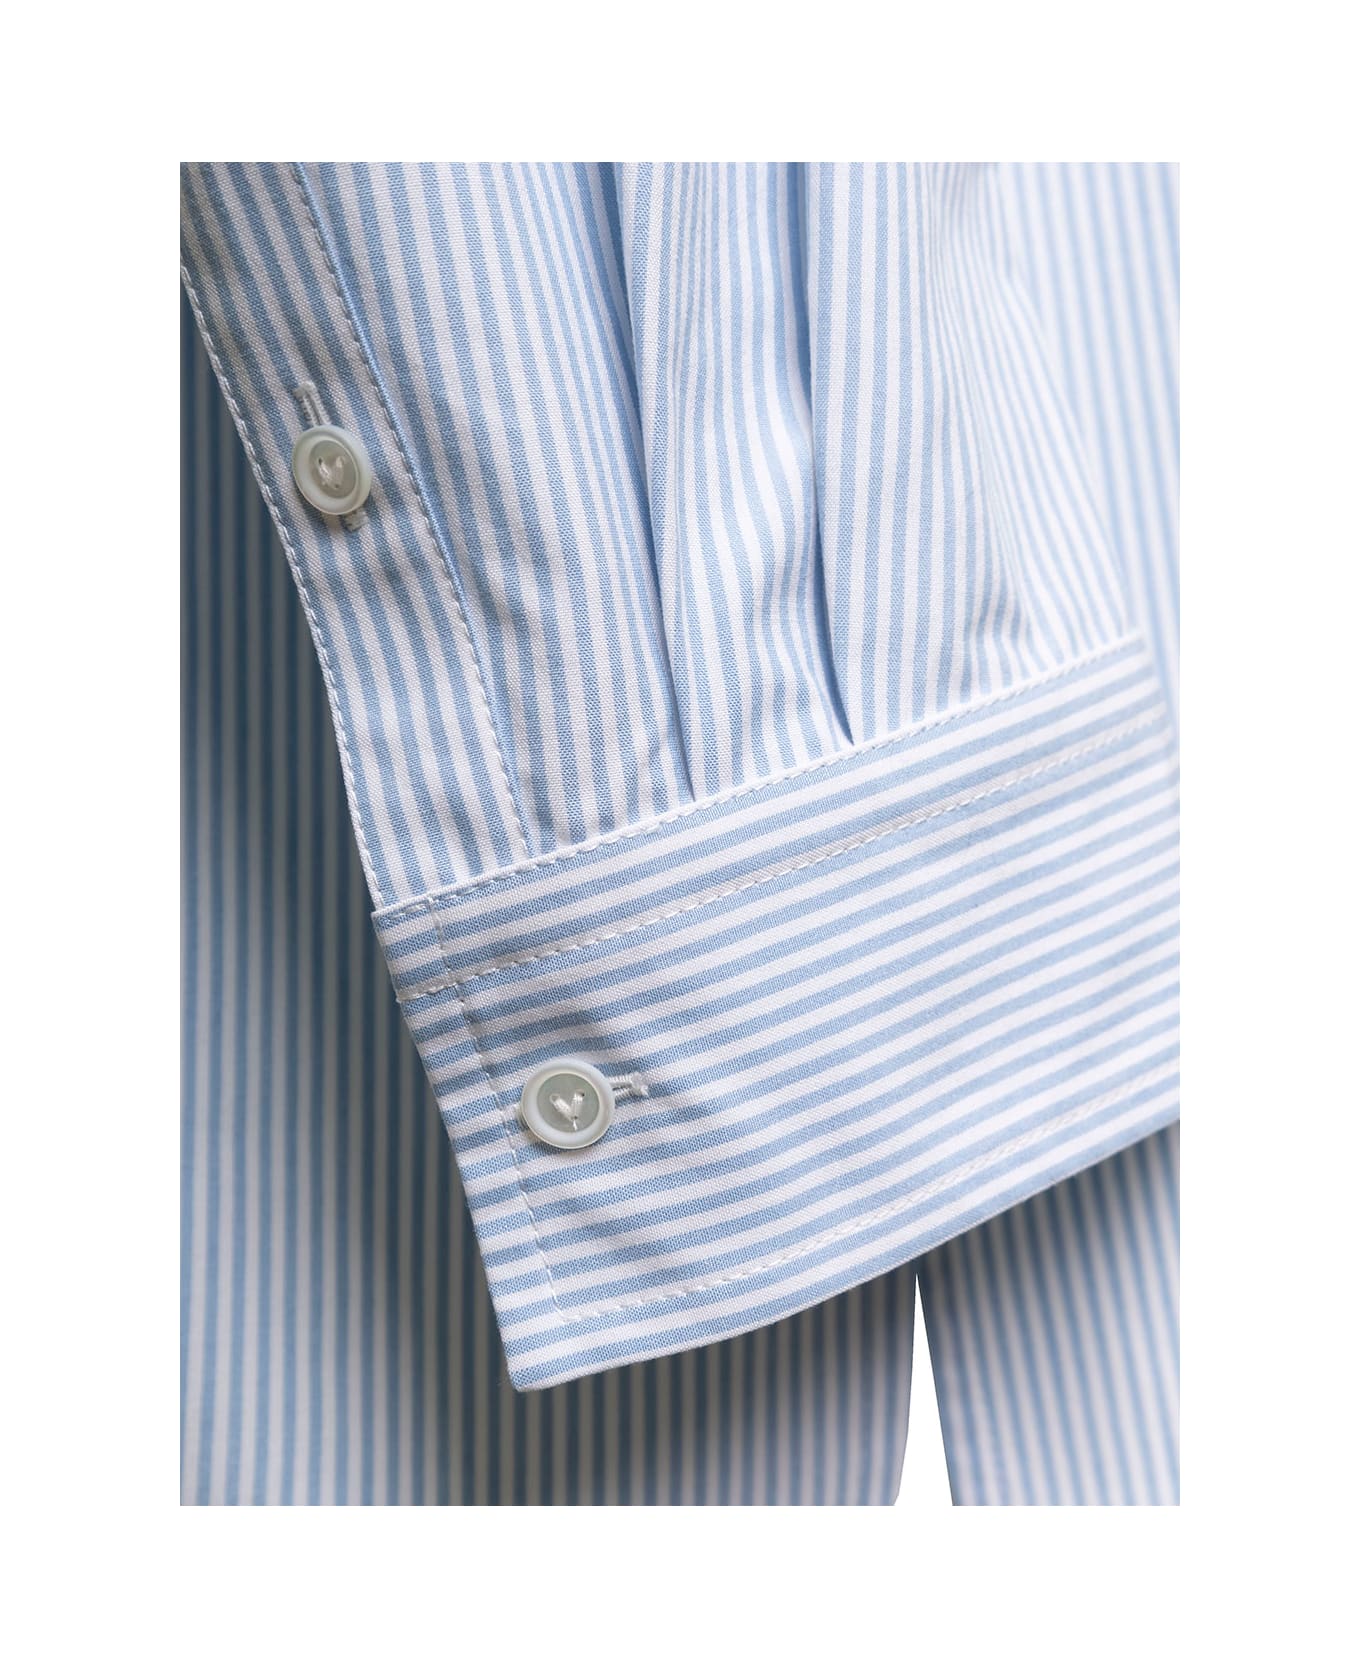 Bottega Veneta Striped Oversize Shirt - Light blue シャツ